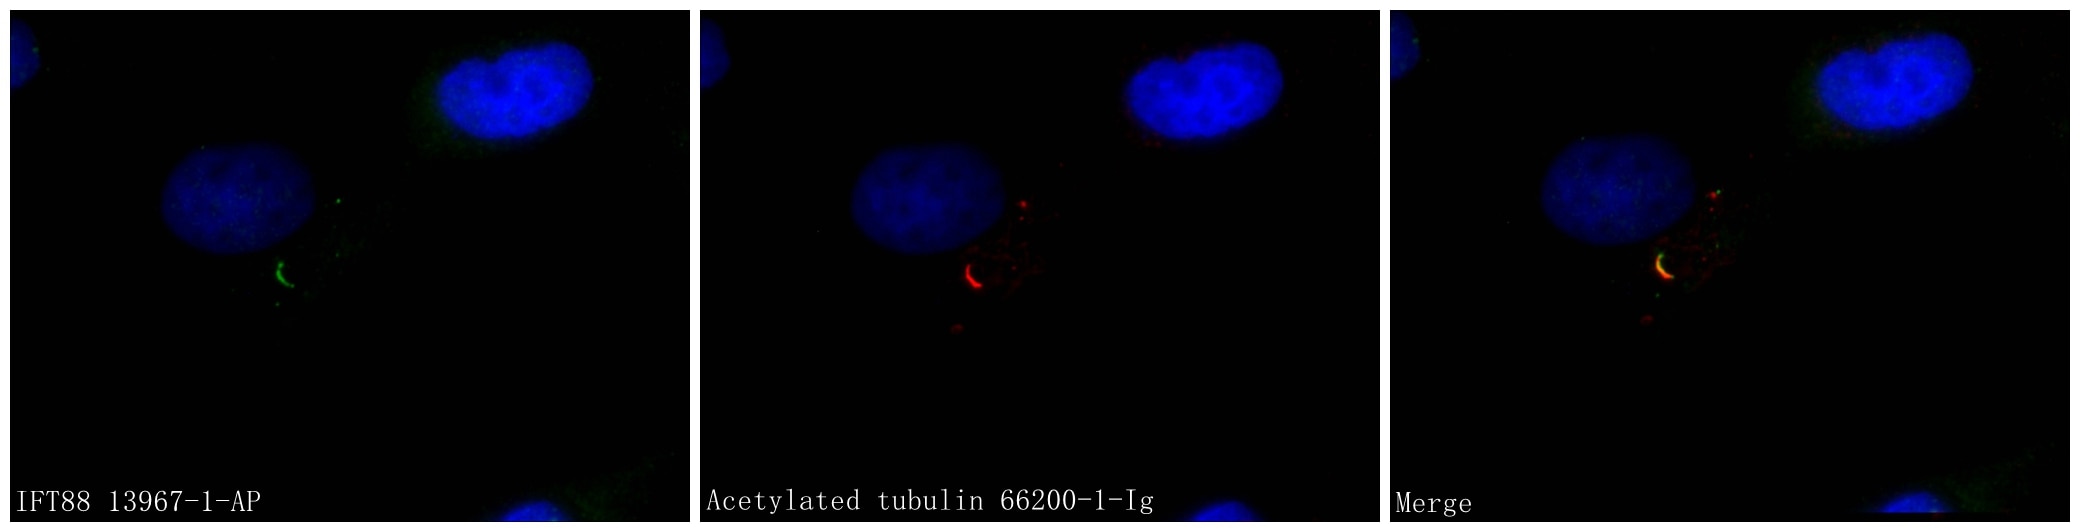 IFT88 Antibody IF MDCK cells 13967-1-AP